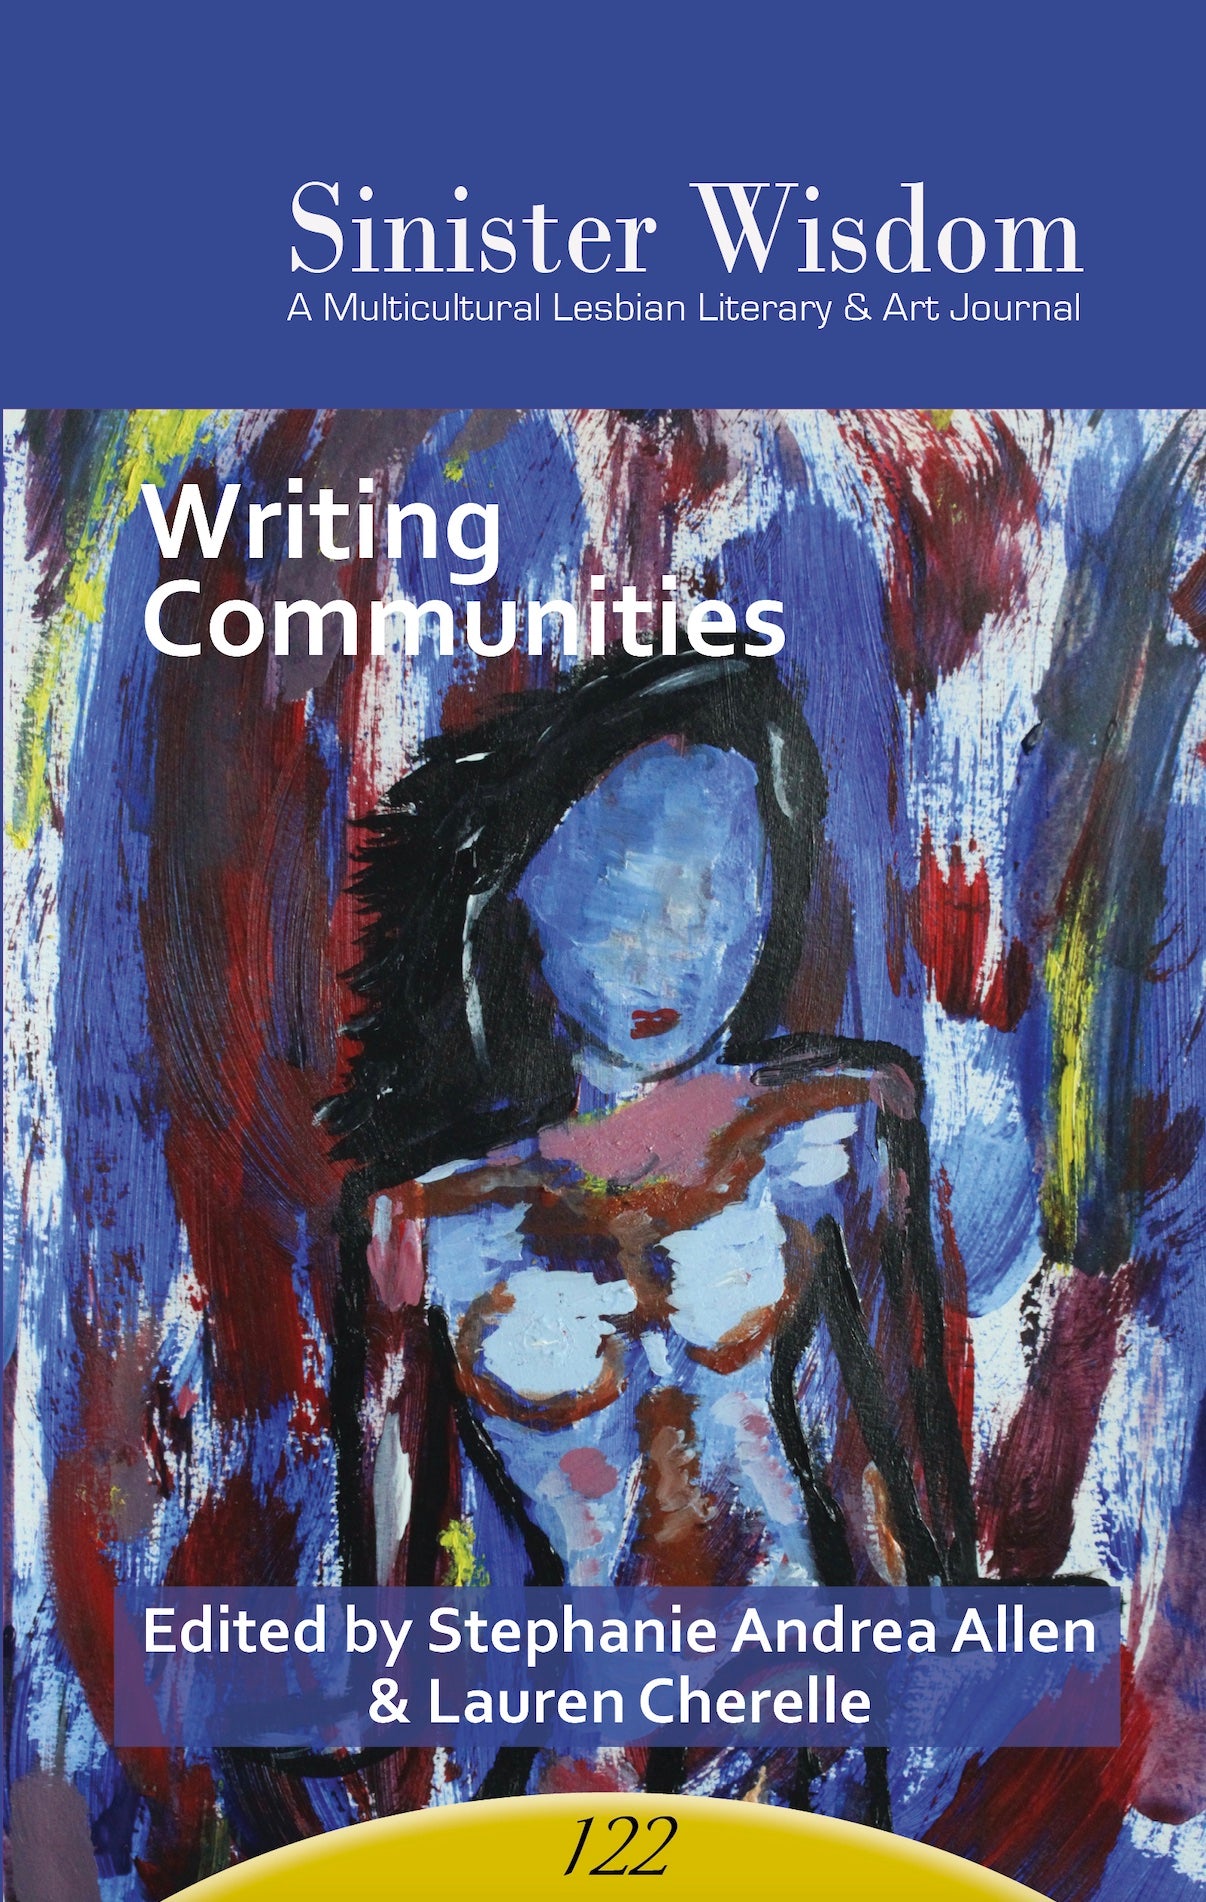 Sinister Wisdom 122: Writing Communities